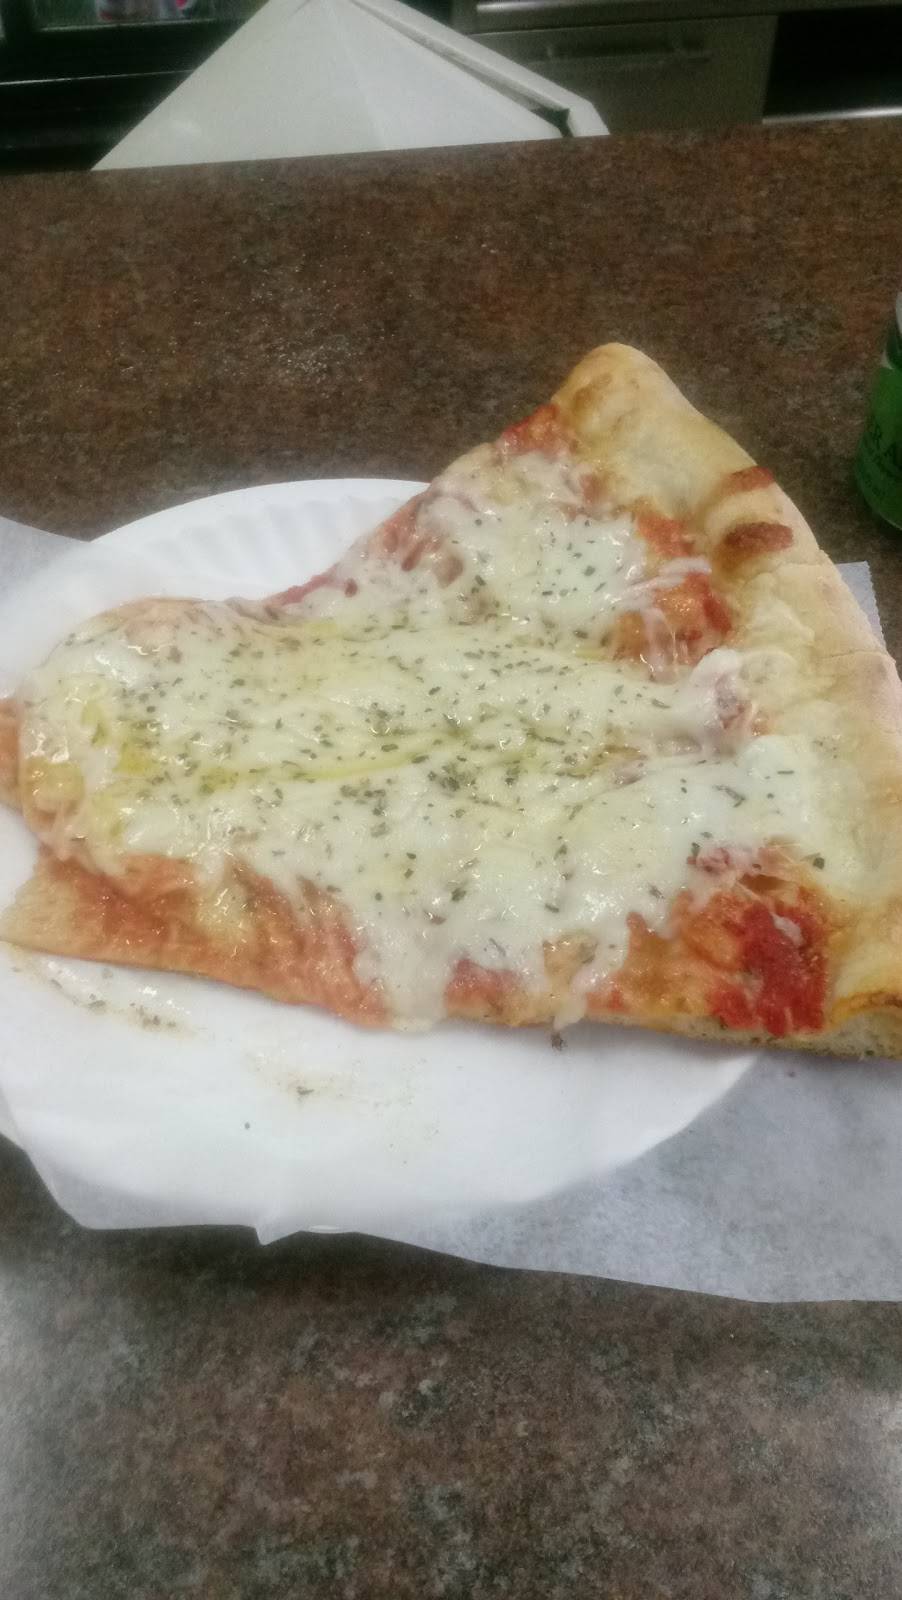 My Place Family Pizza | restaurant | 240 E 198th St, Bronx, NY 10458, USA | 7185622399 OR +1 718-562-2399